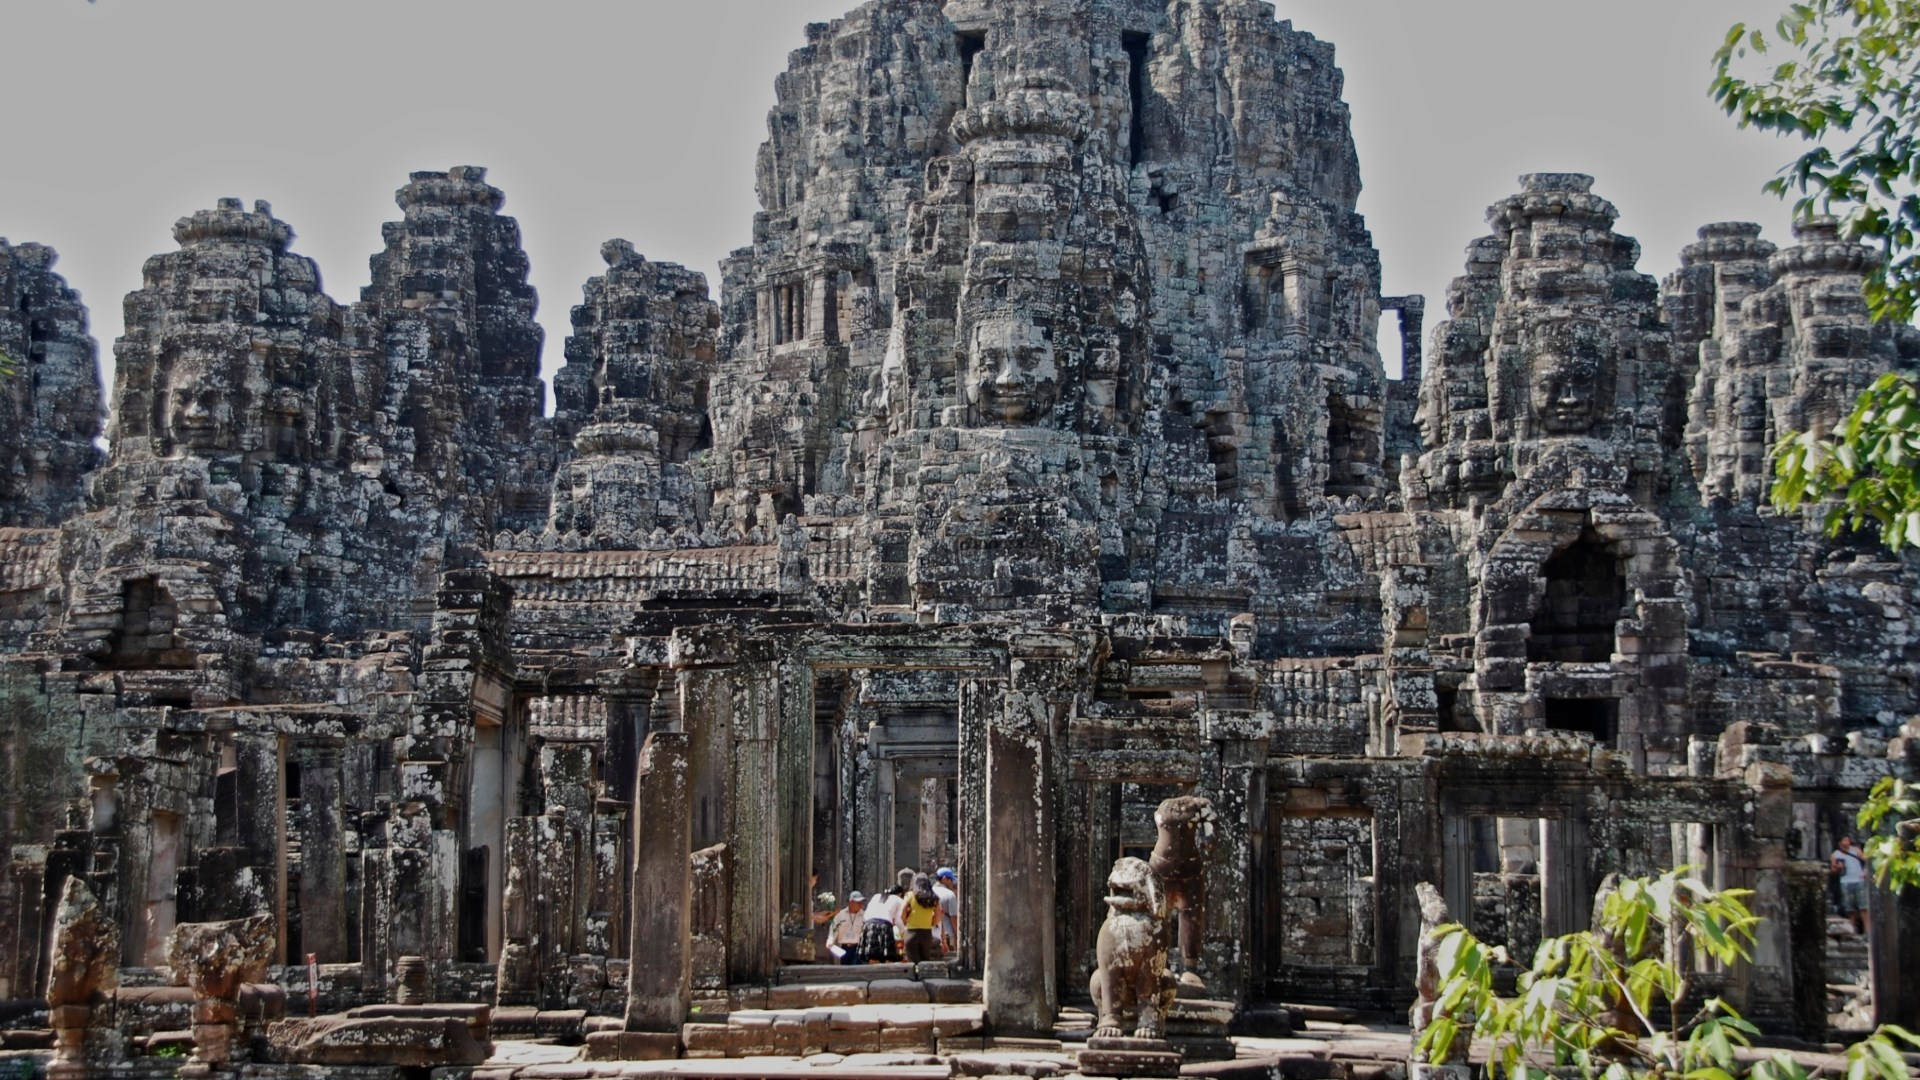 Caption: Majestic Ruins Of Angkor Wat